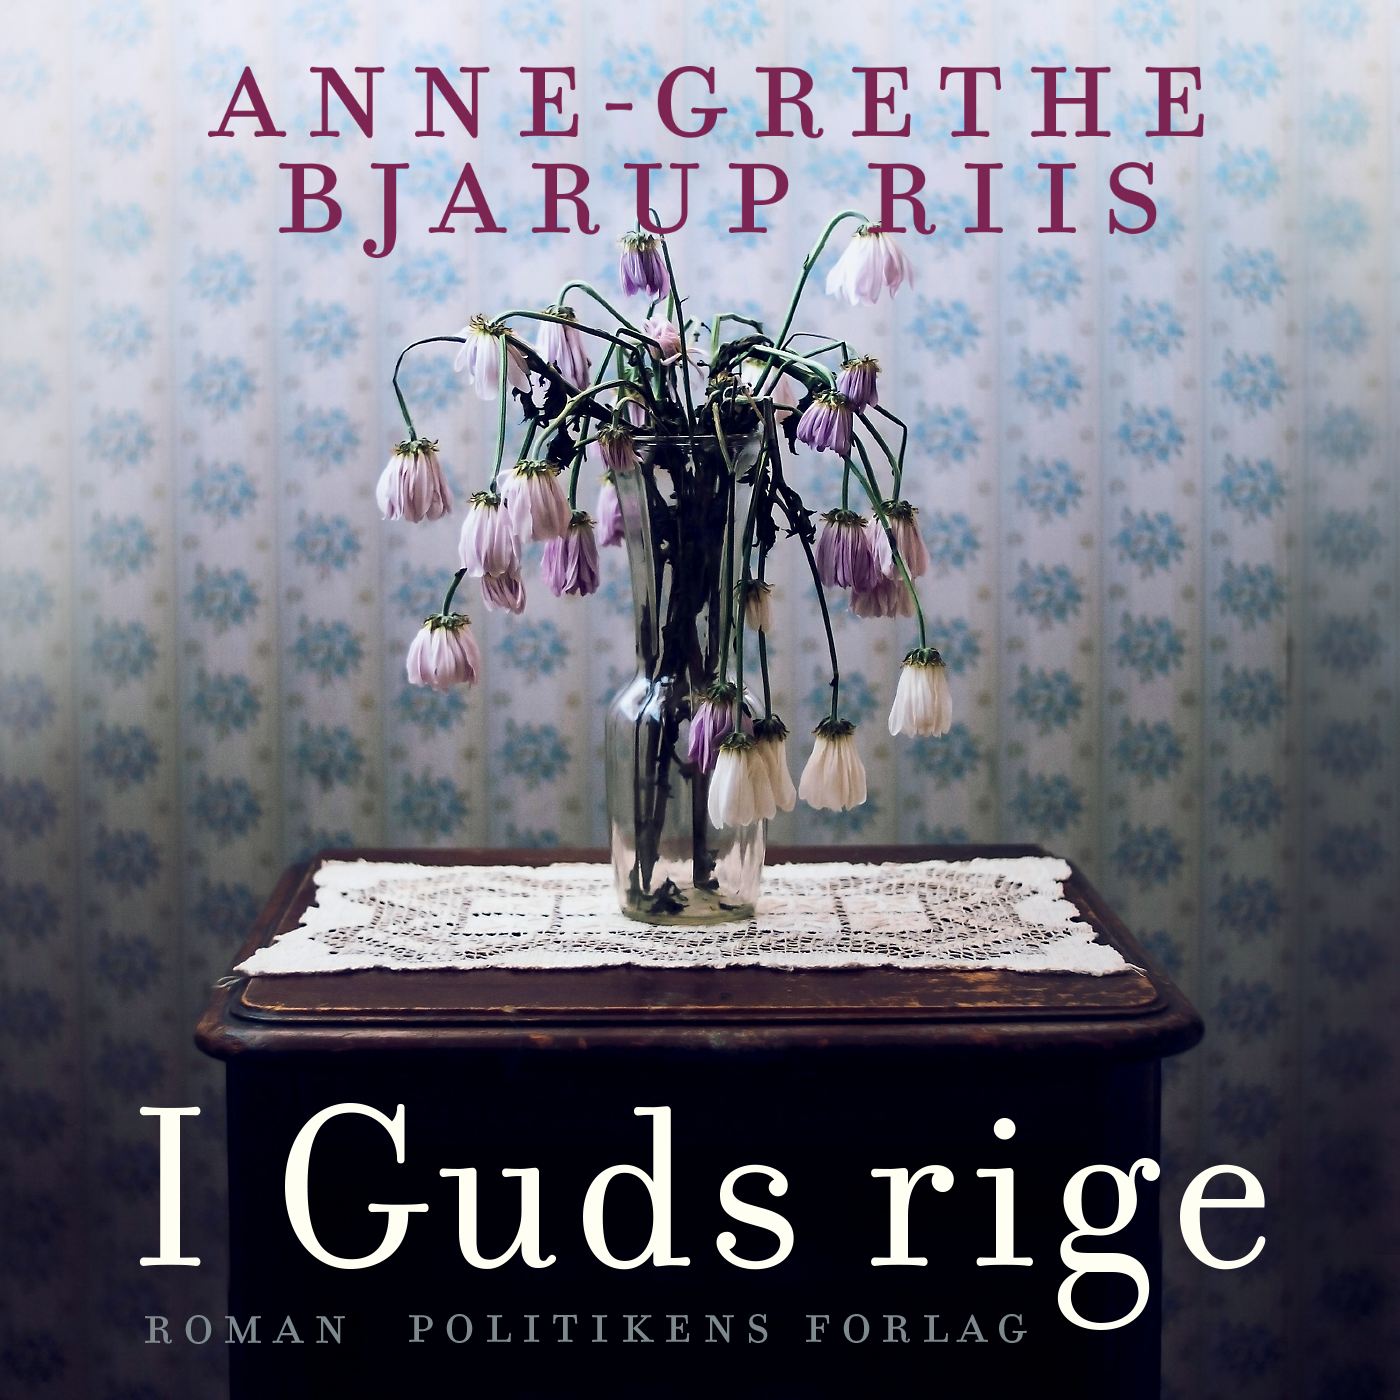 I Guds rige, ljudbok av Anne-Grethe Bjarup Riis